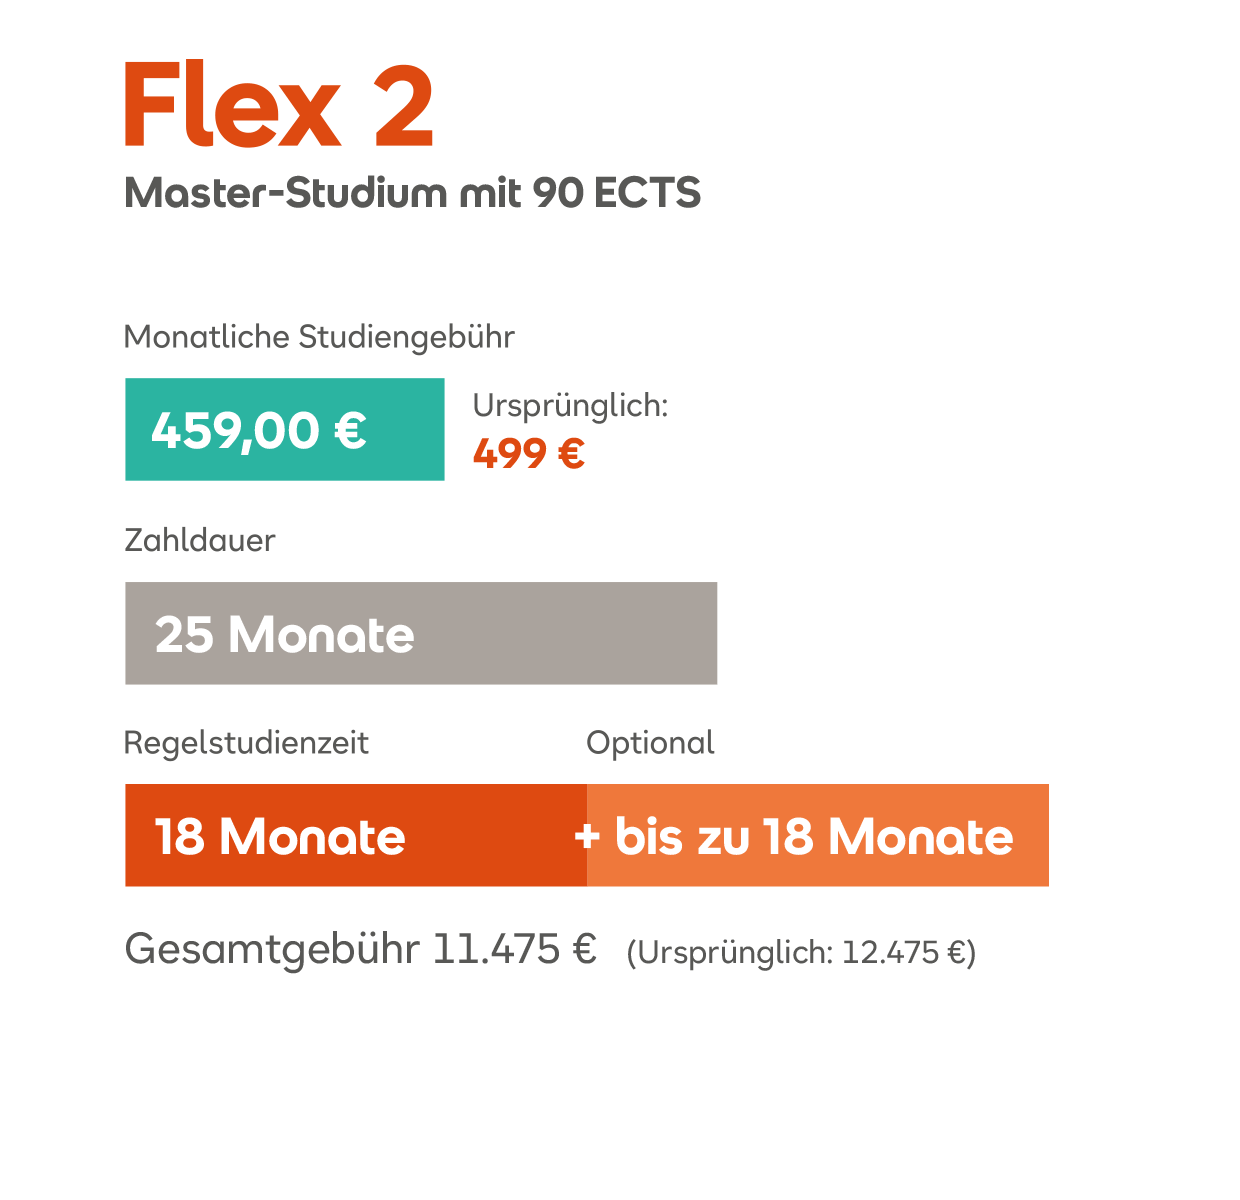 Flex 2 Master